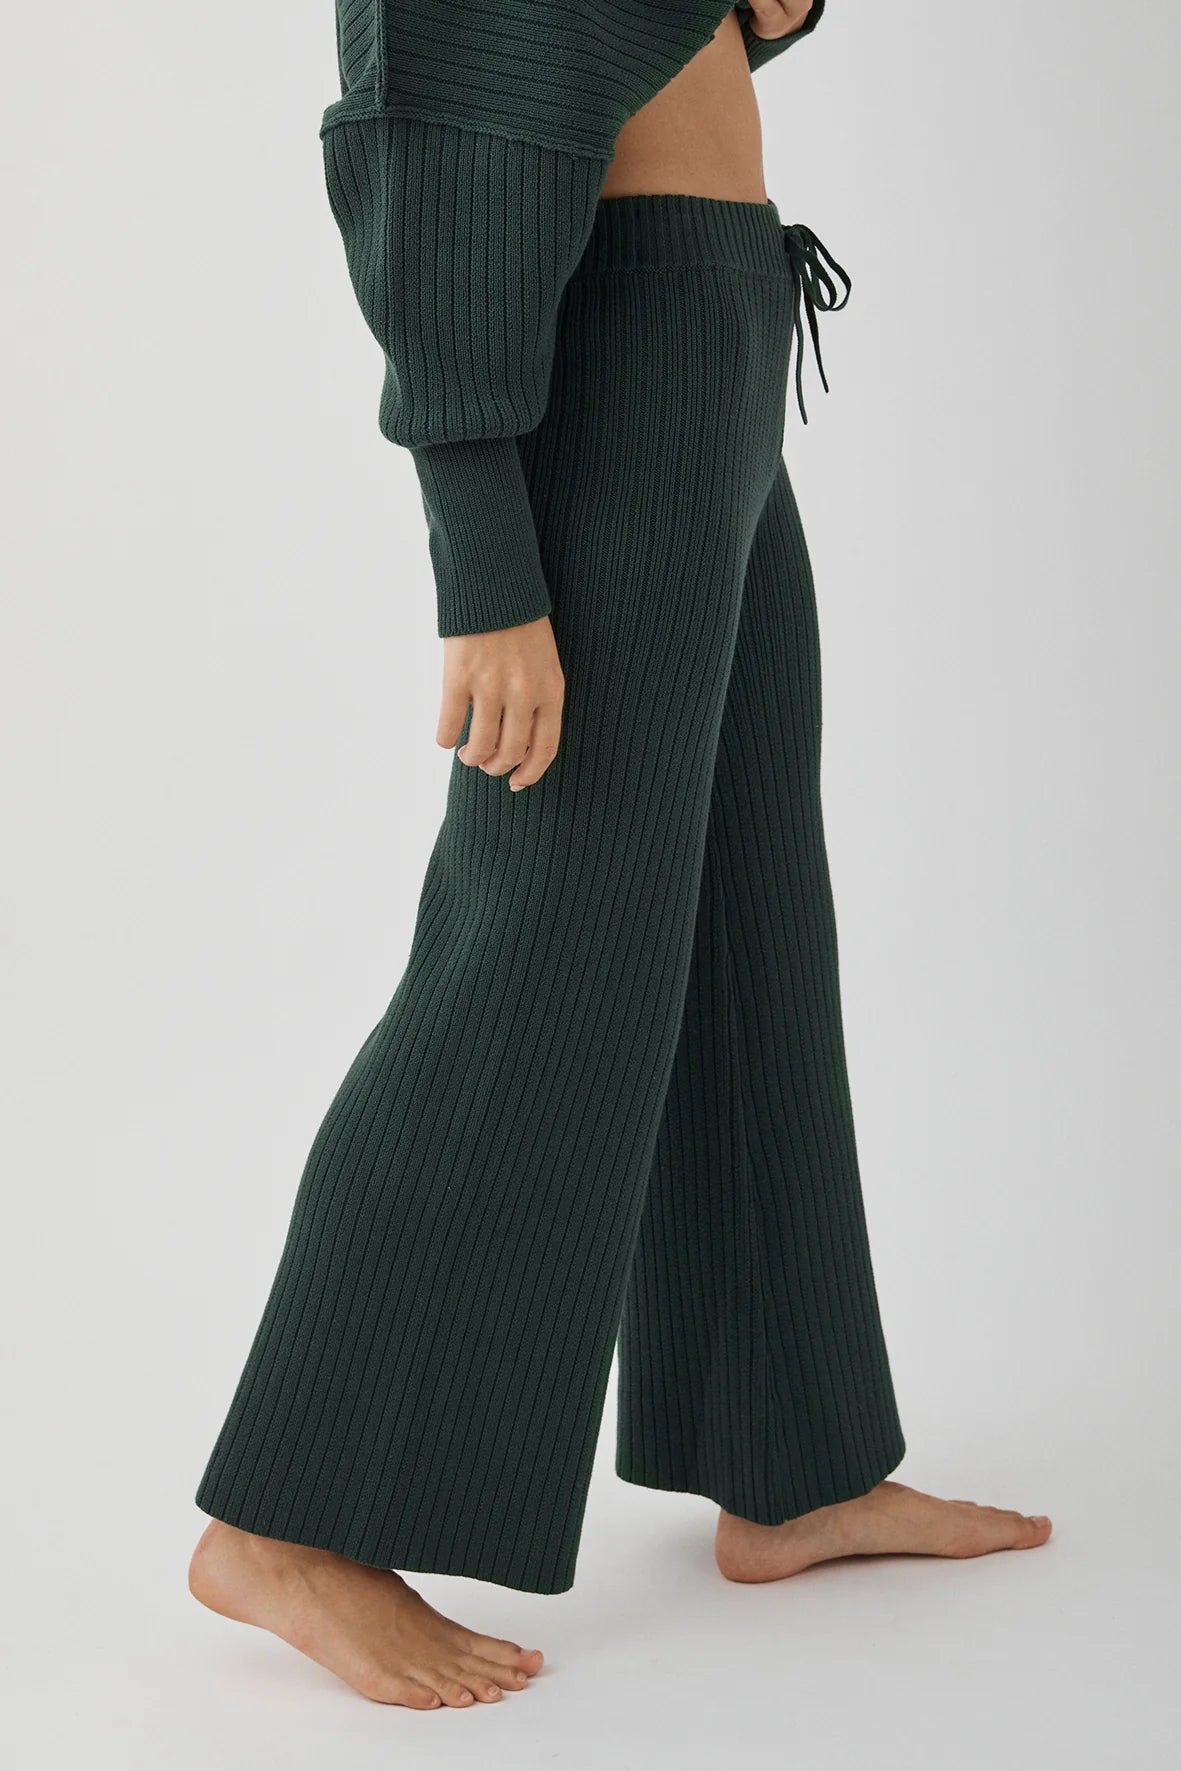 Vera Organic Knit Pants